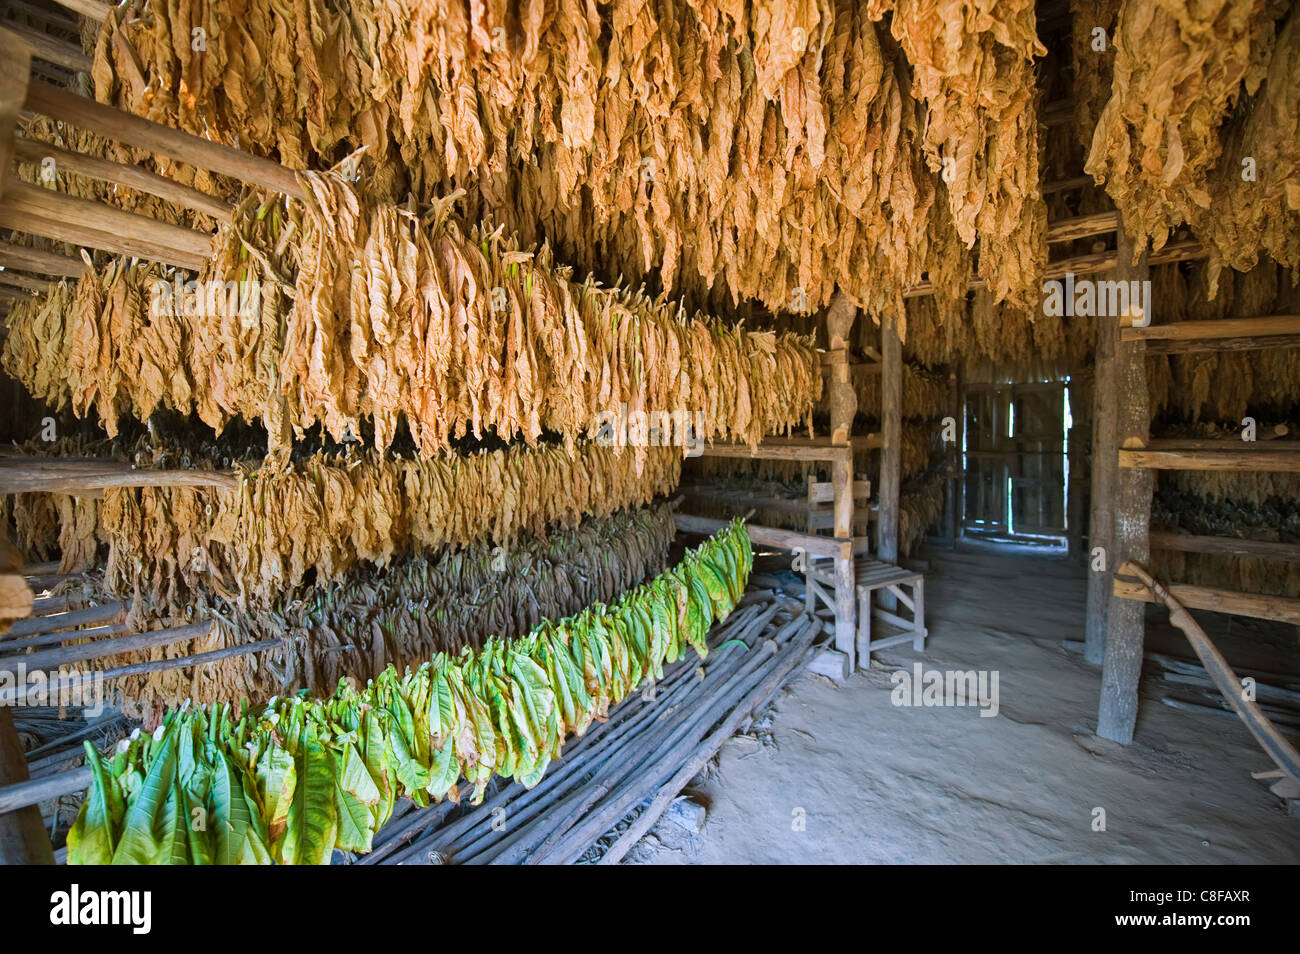 Tabakblätter aufgehängt, um zu trocknen, Vinales Tal, UNESCO-Weltkulturerbe, Kuba, Westindische Inseln, Karibik, Mittelamerika Stockfoto